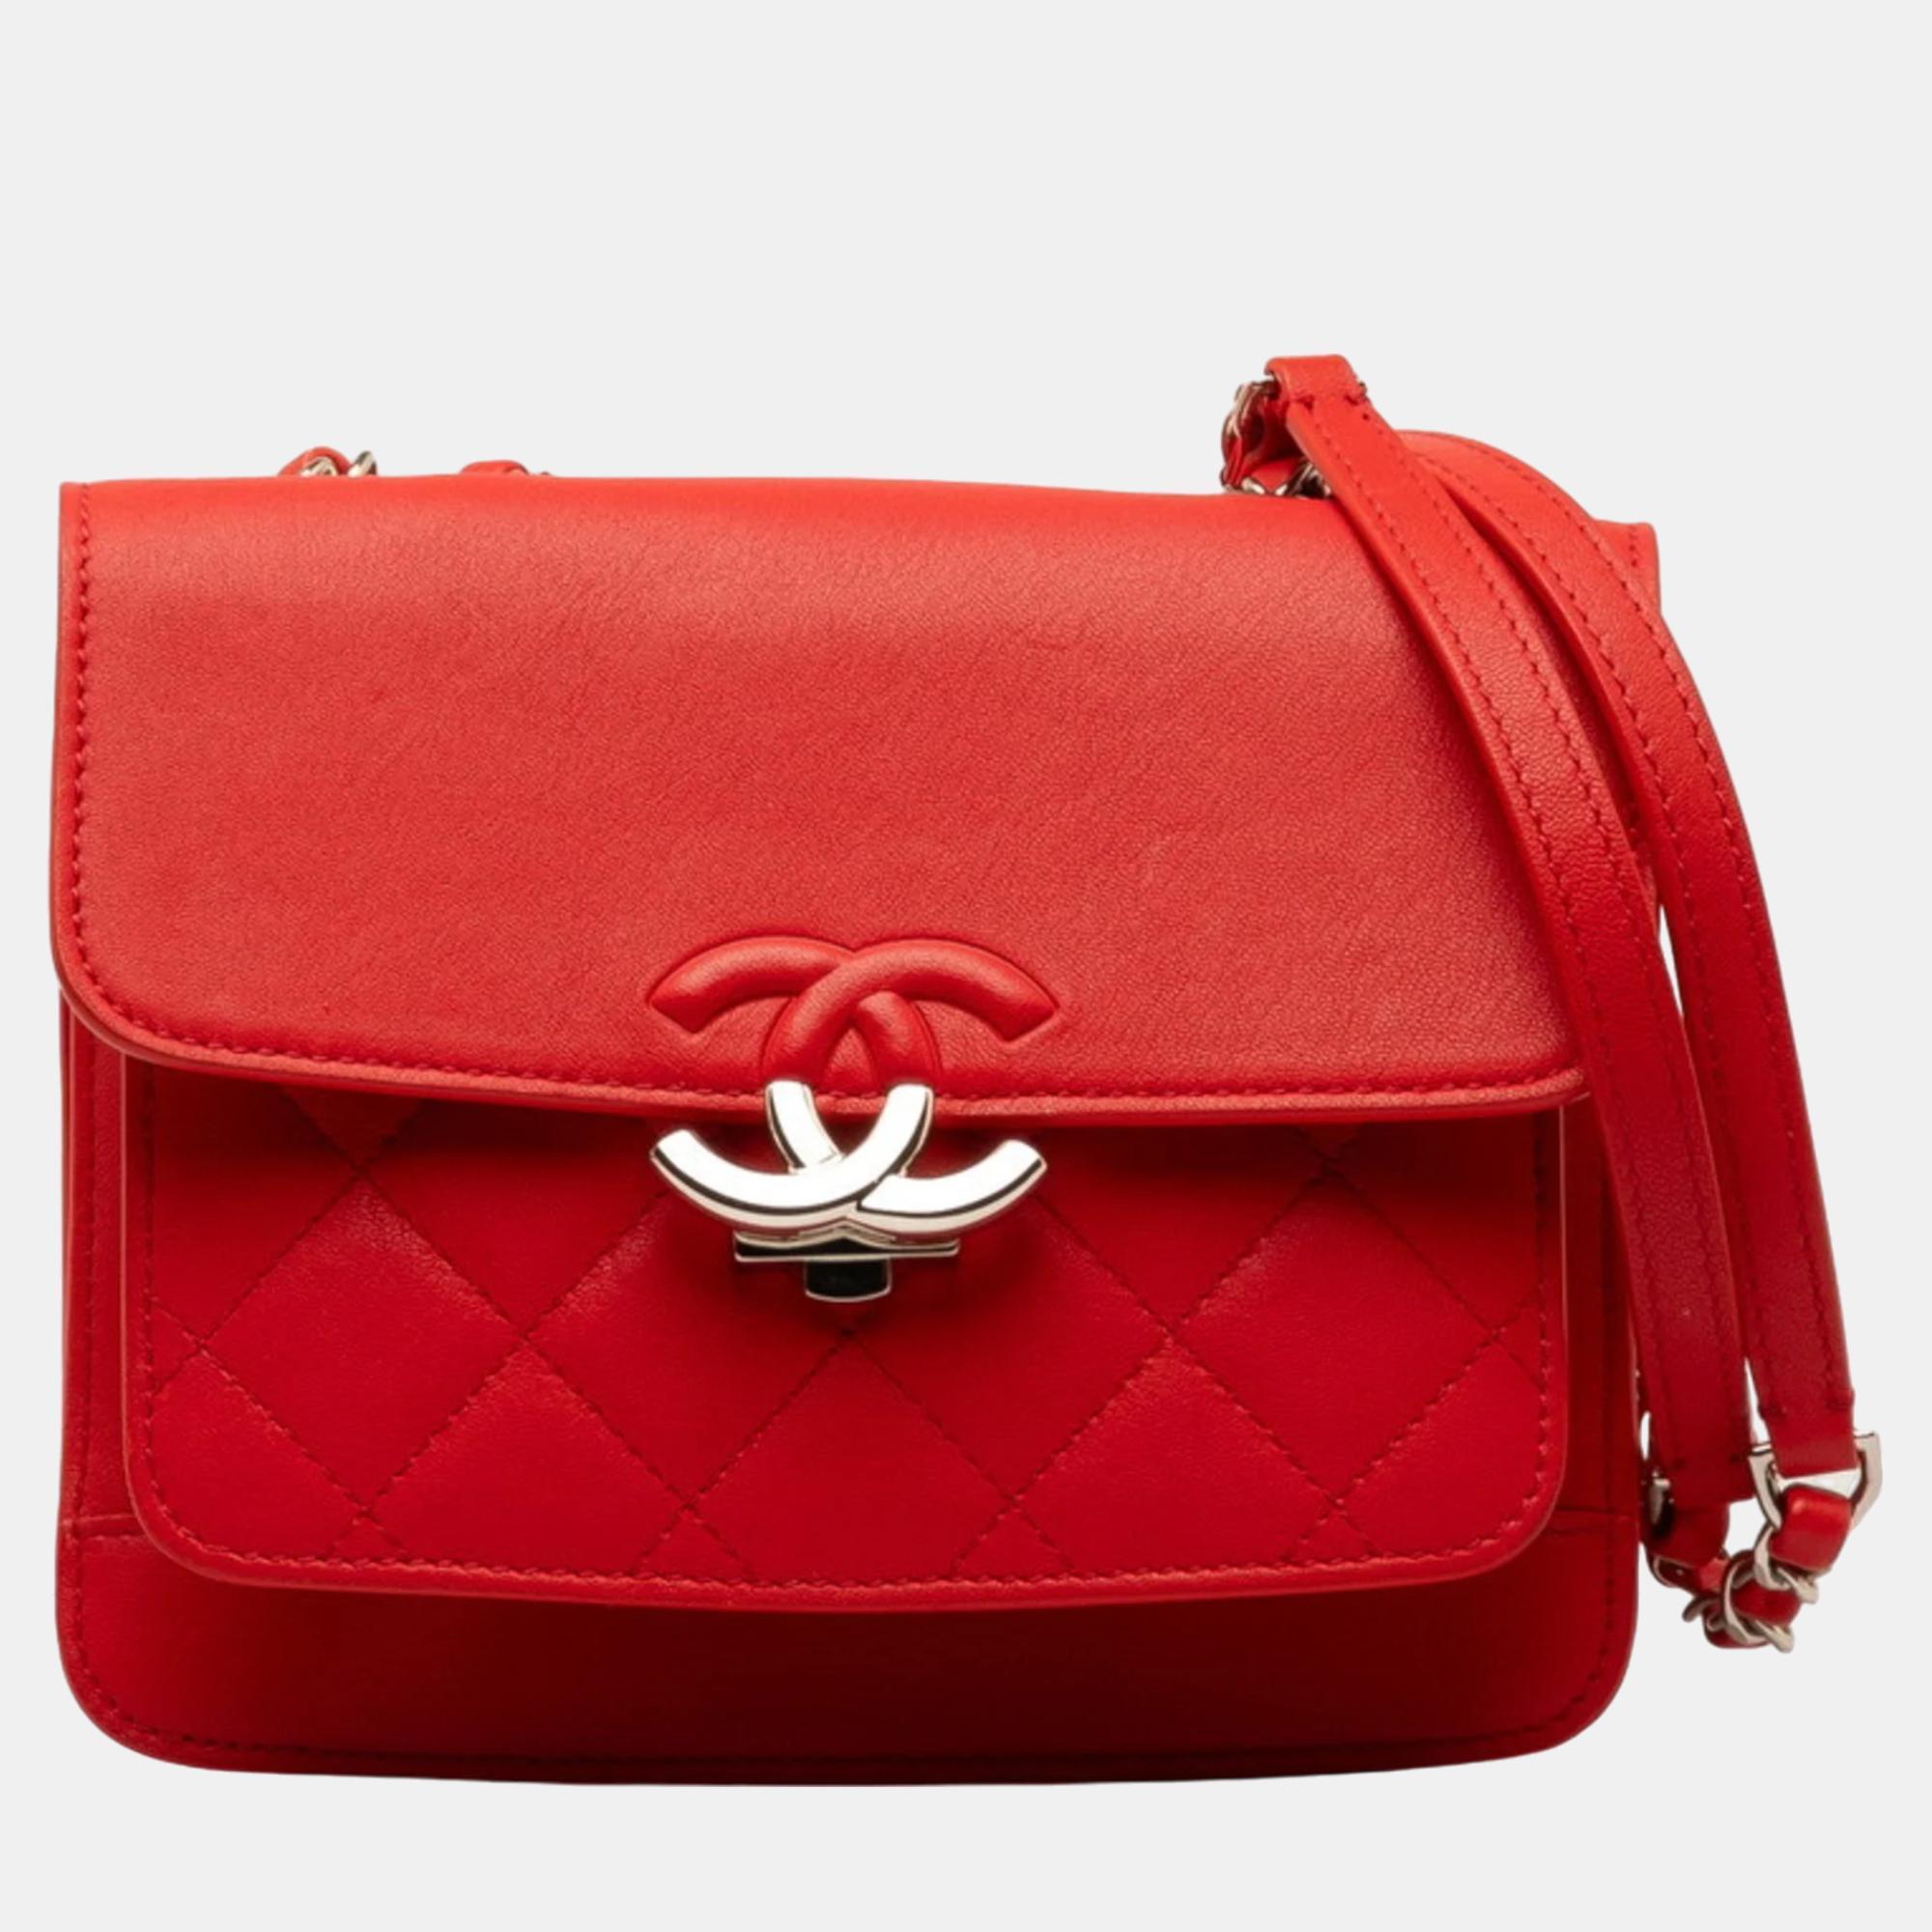 Chanel red leather mini cc box flap bag